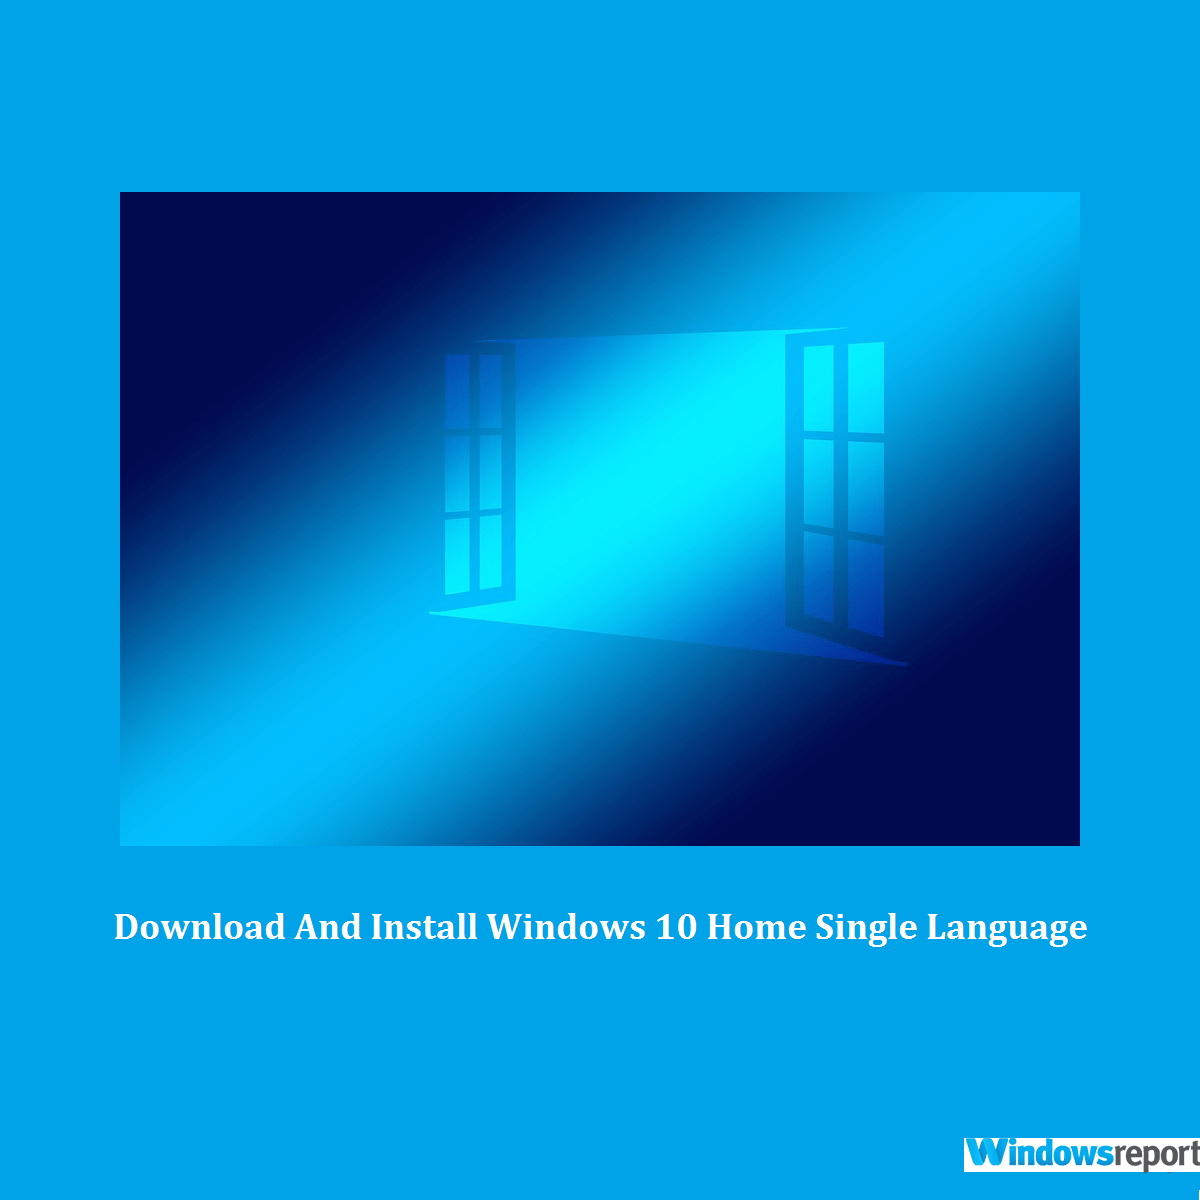 Windows home single language download